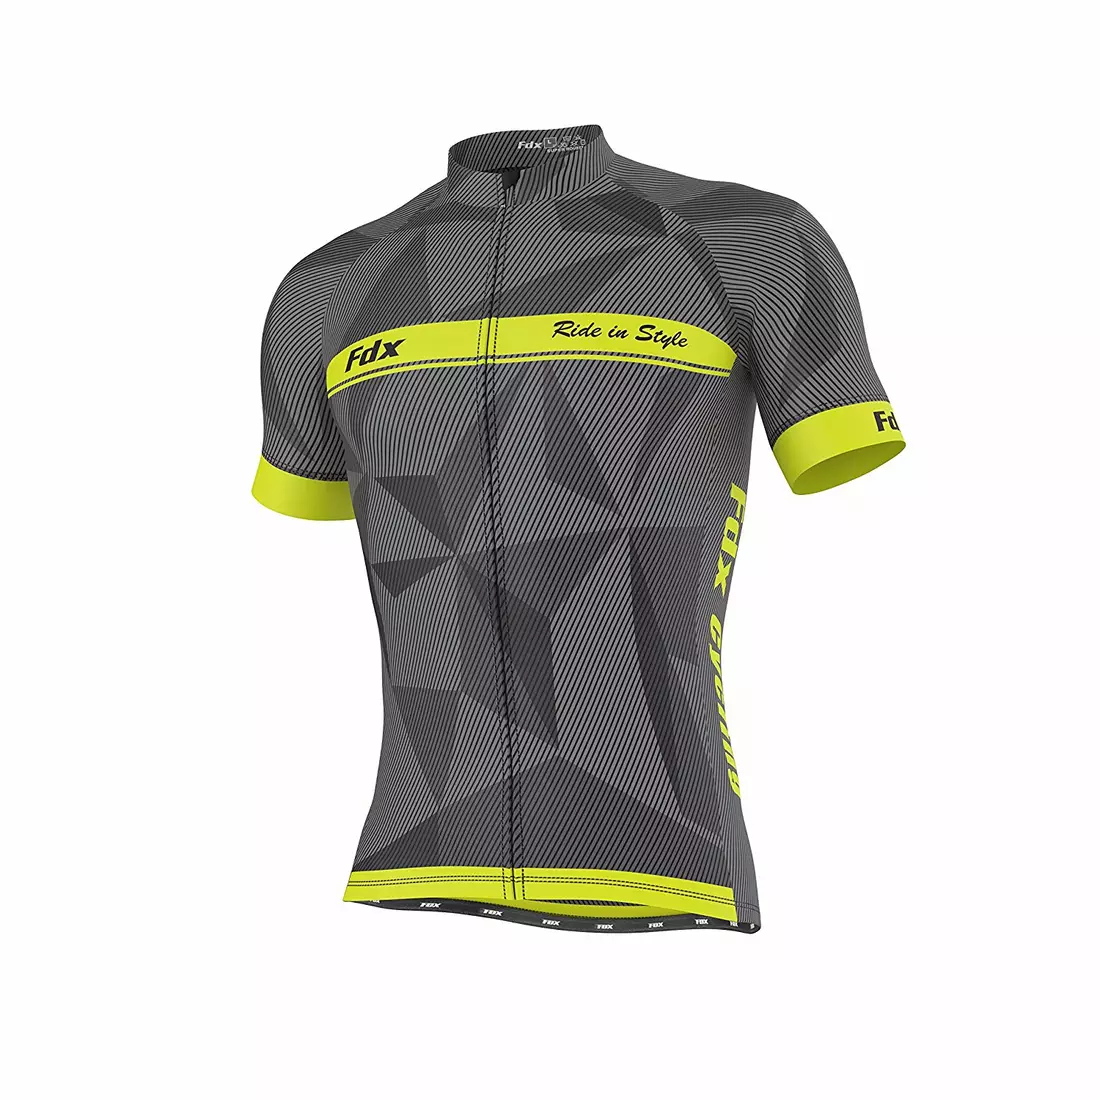 FDX 1270 cycling jersey, black and yellow